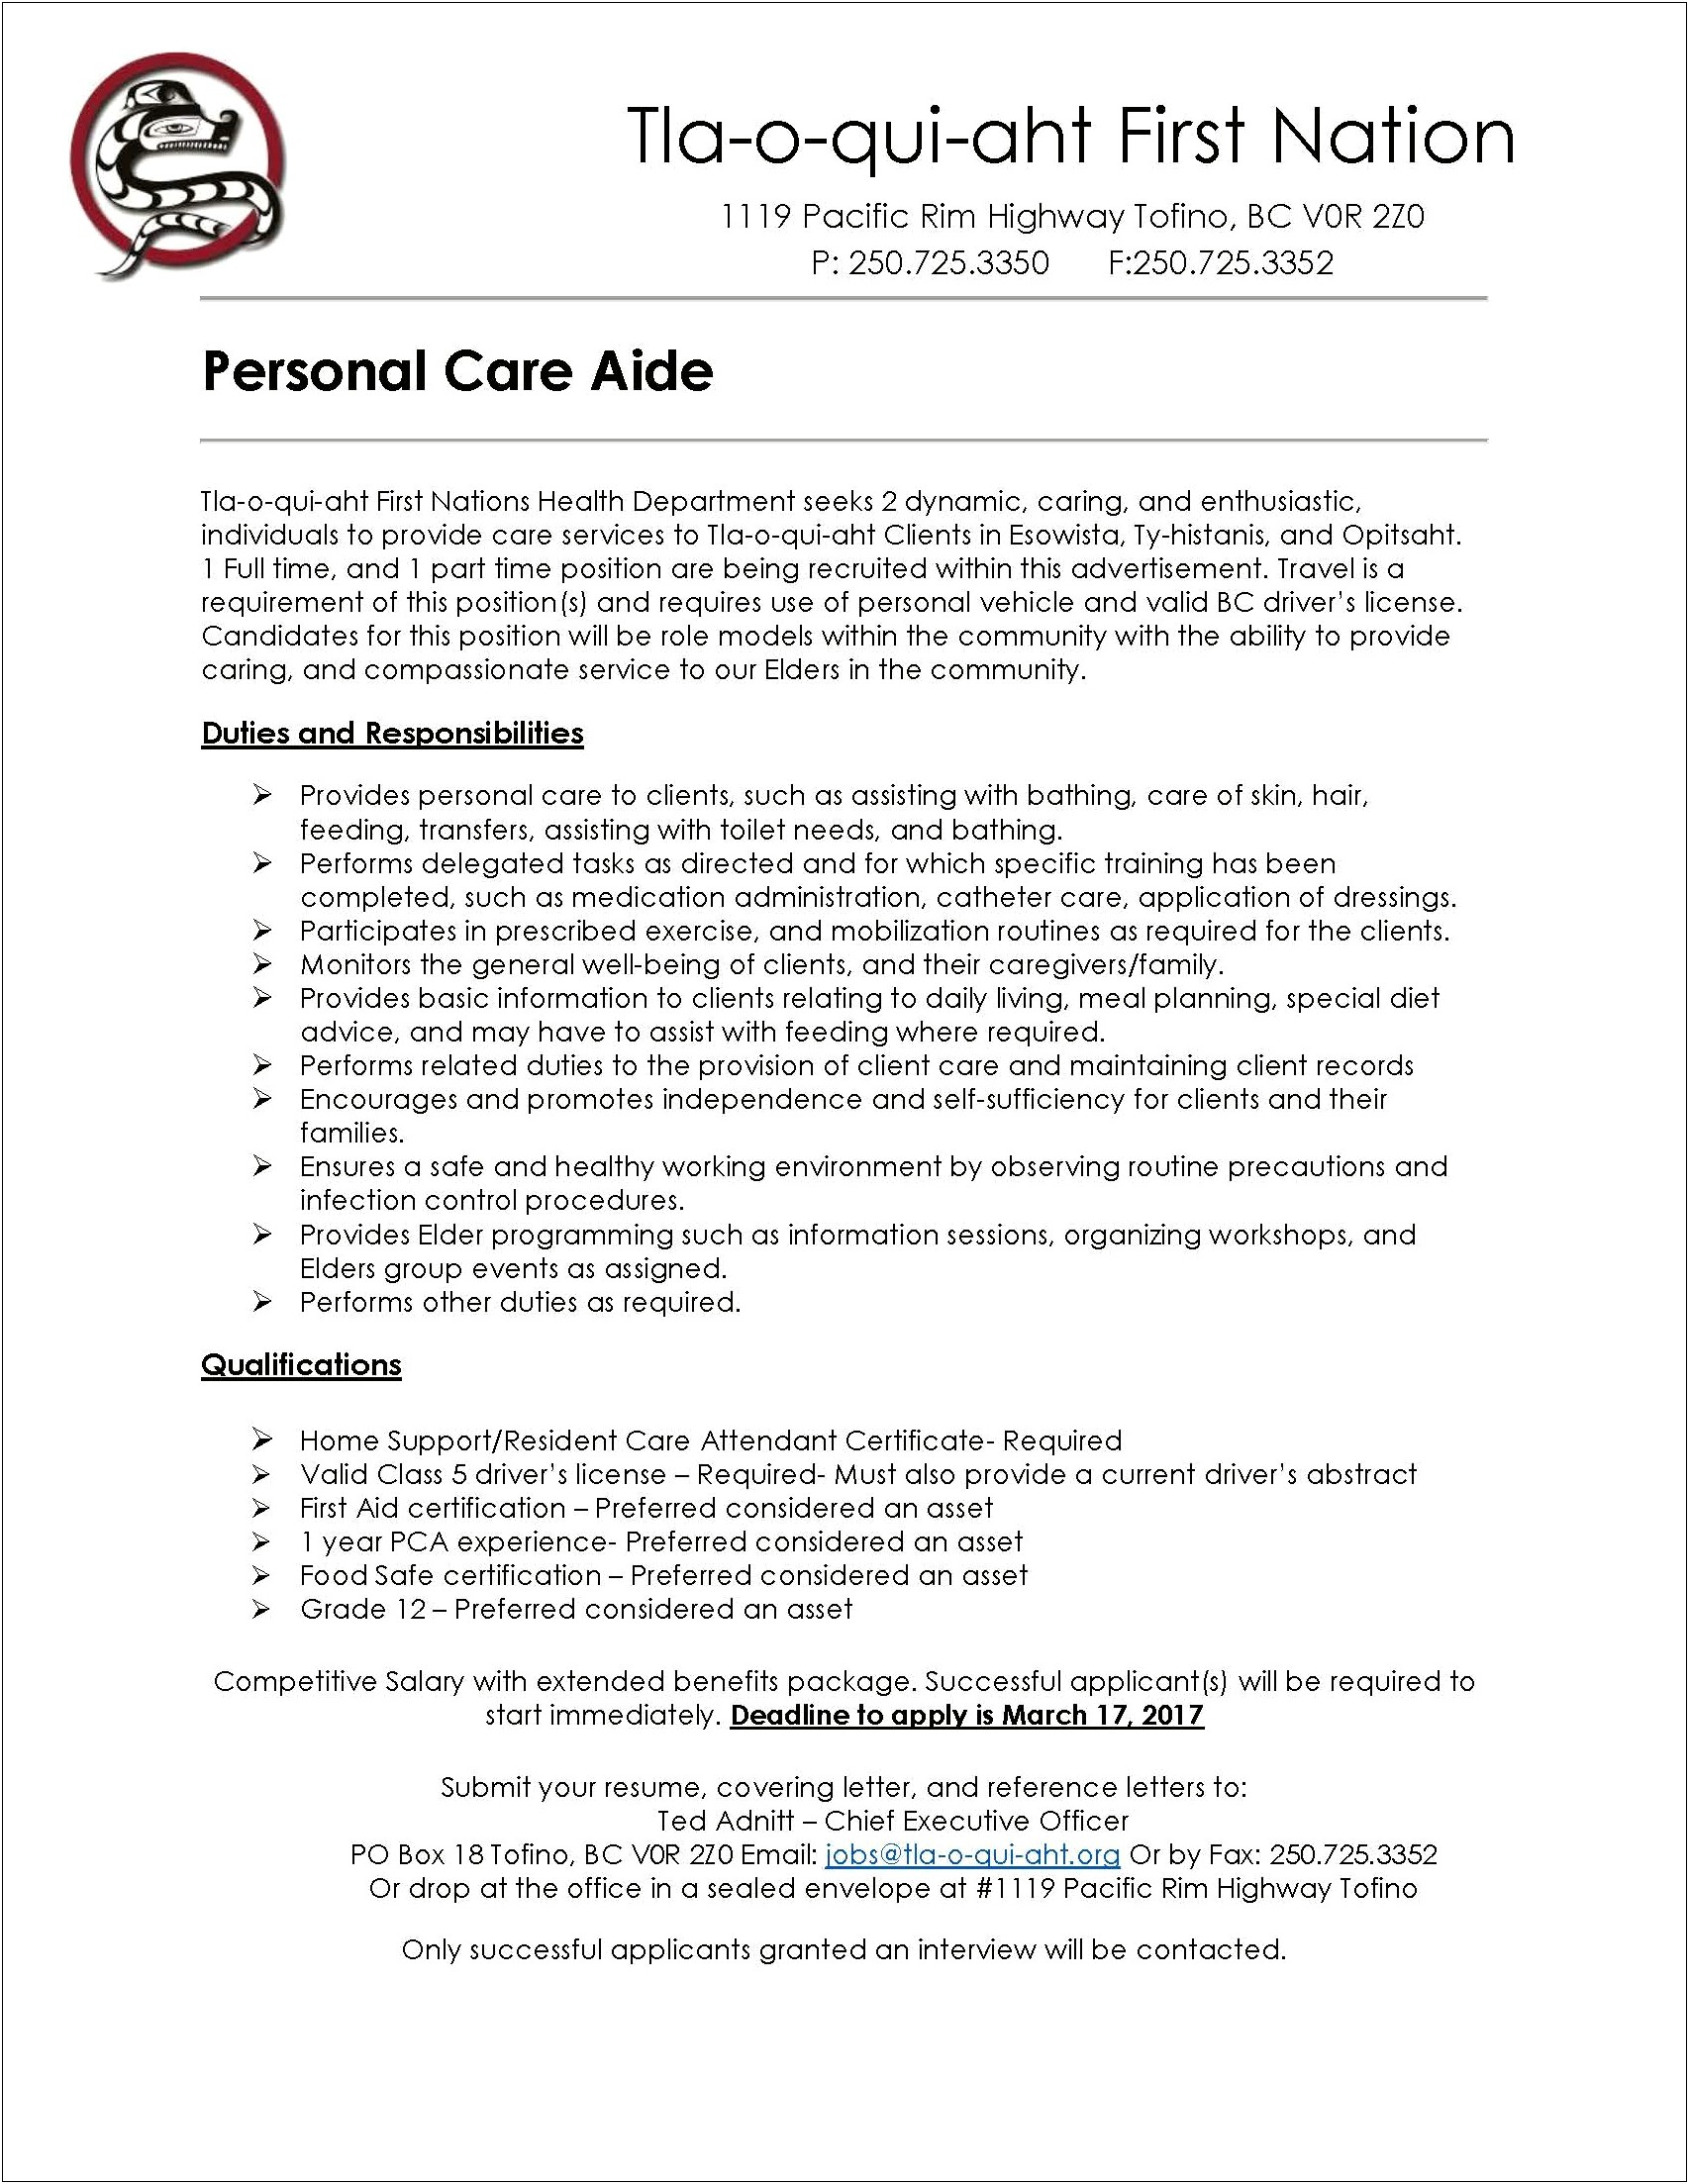 Personal Care Attendant Job Description For Resume